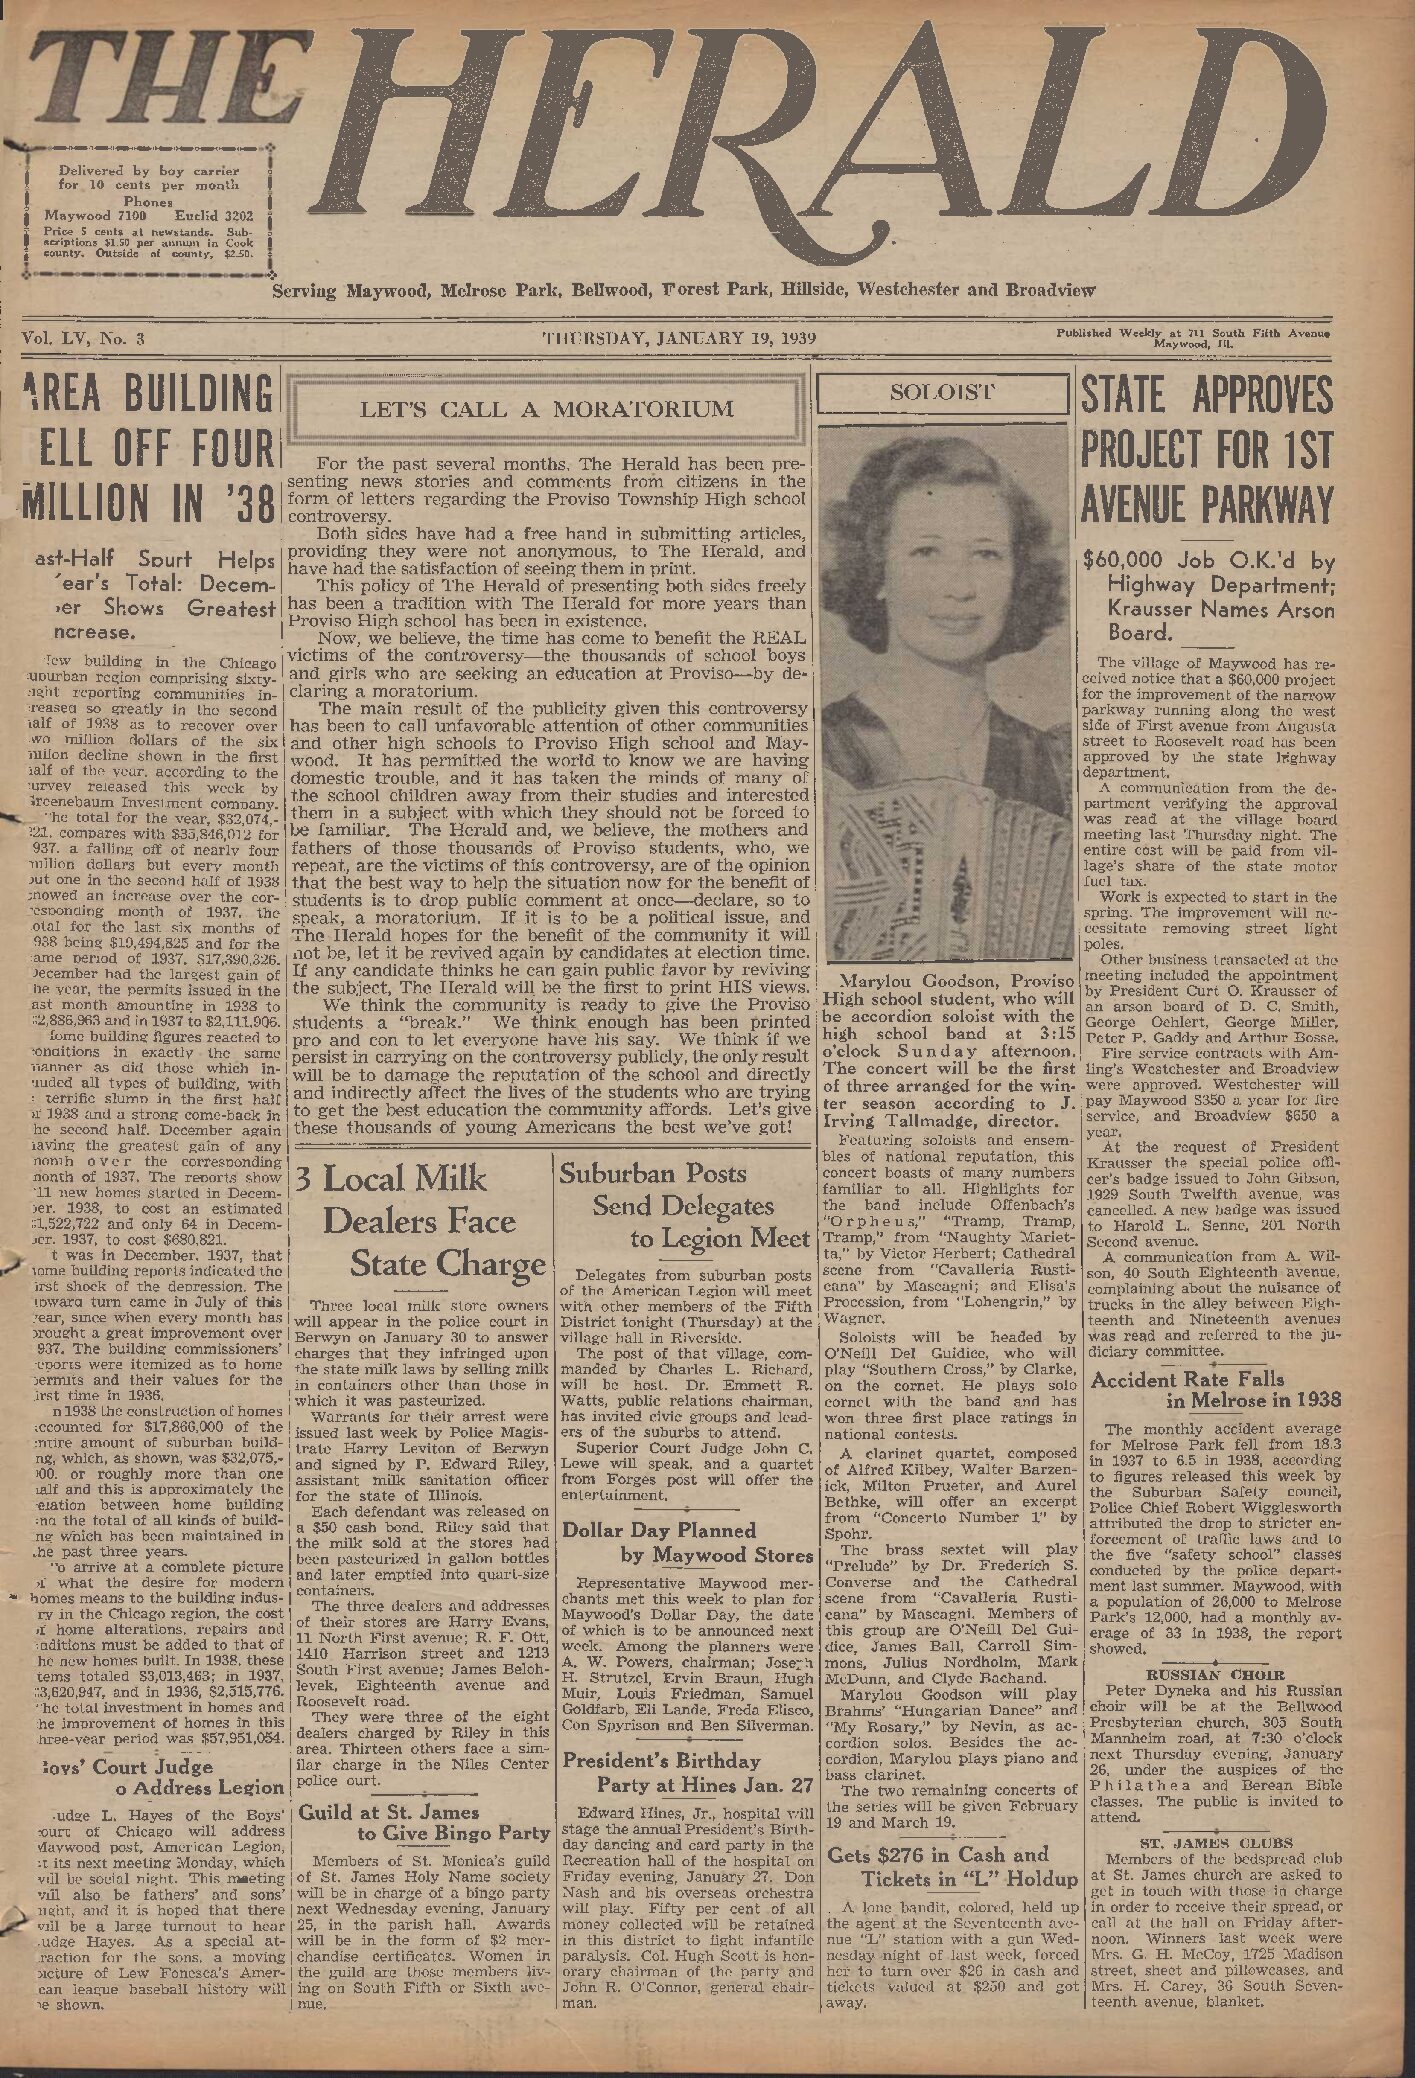 The Herald – 19390119